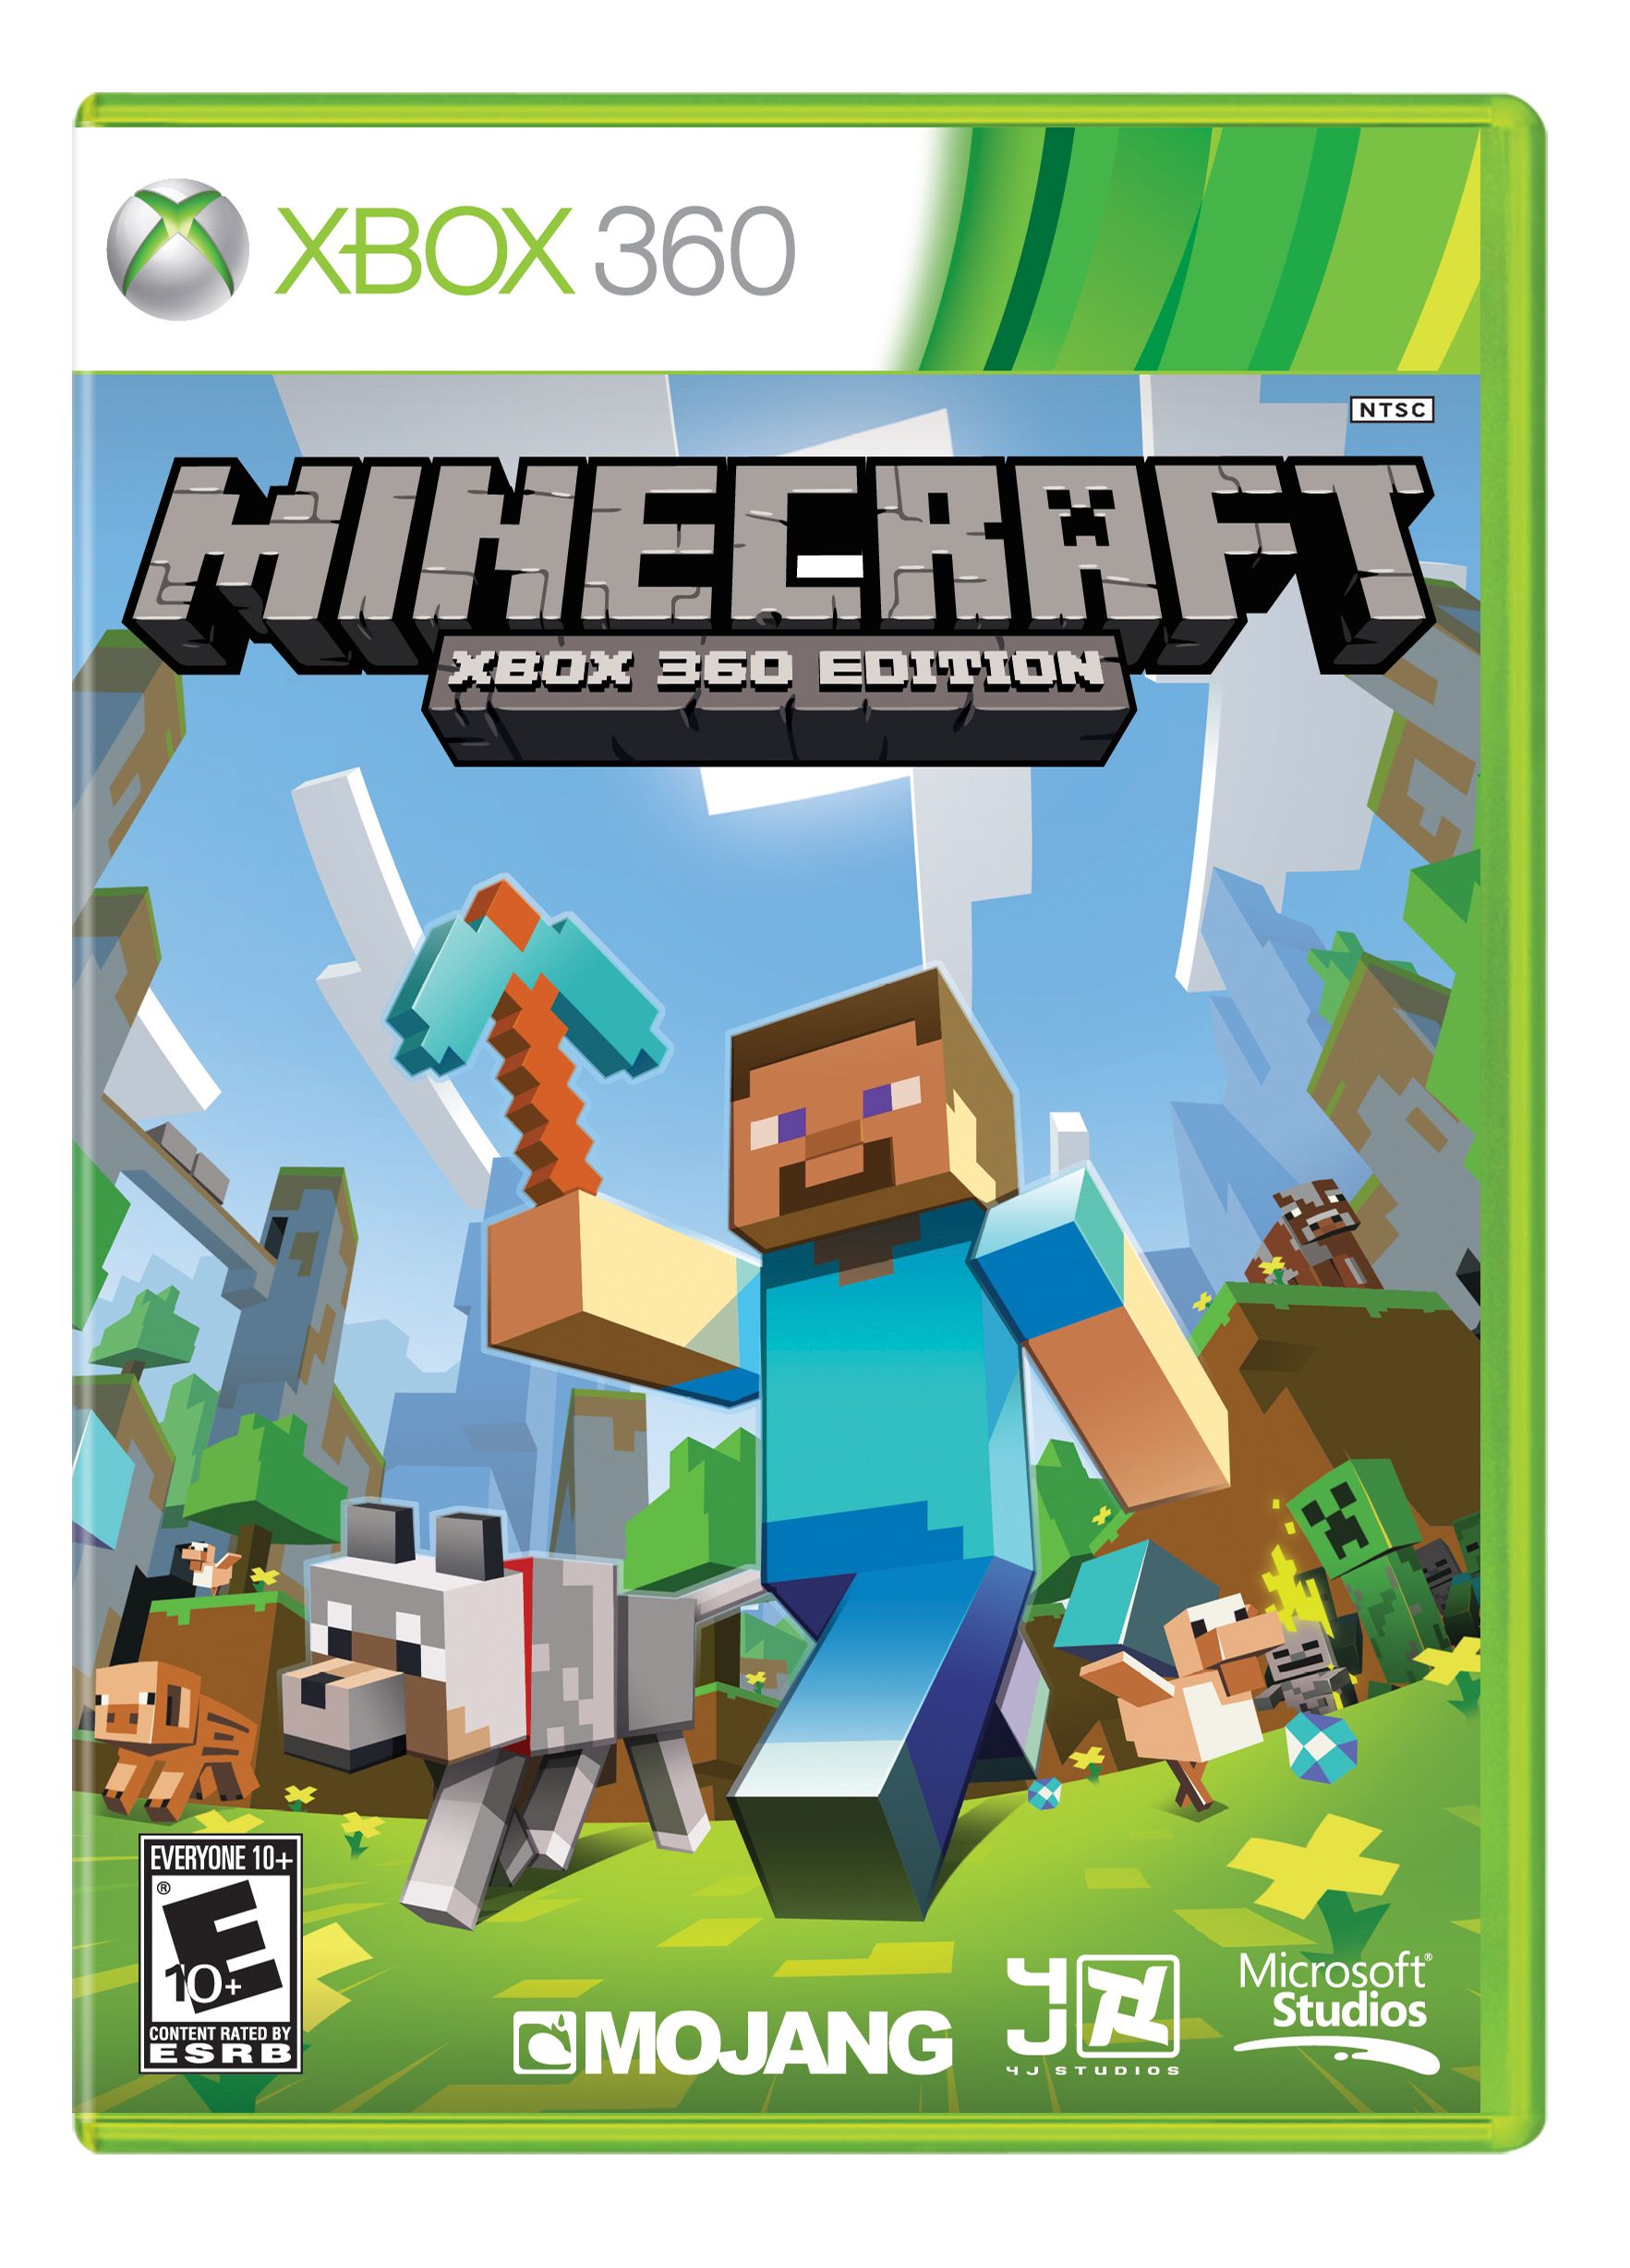 Minecraft: Xbox 360 Edition – One billion hours played, retail version delayed